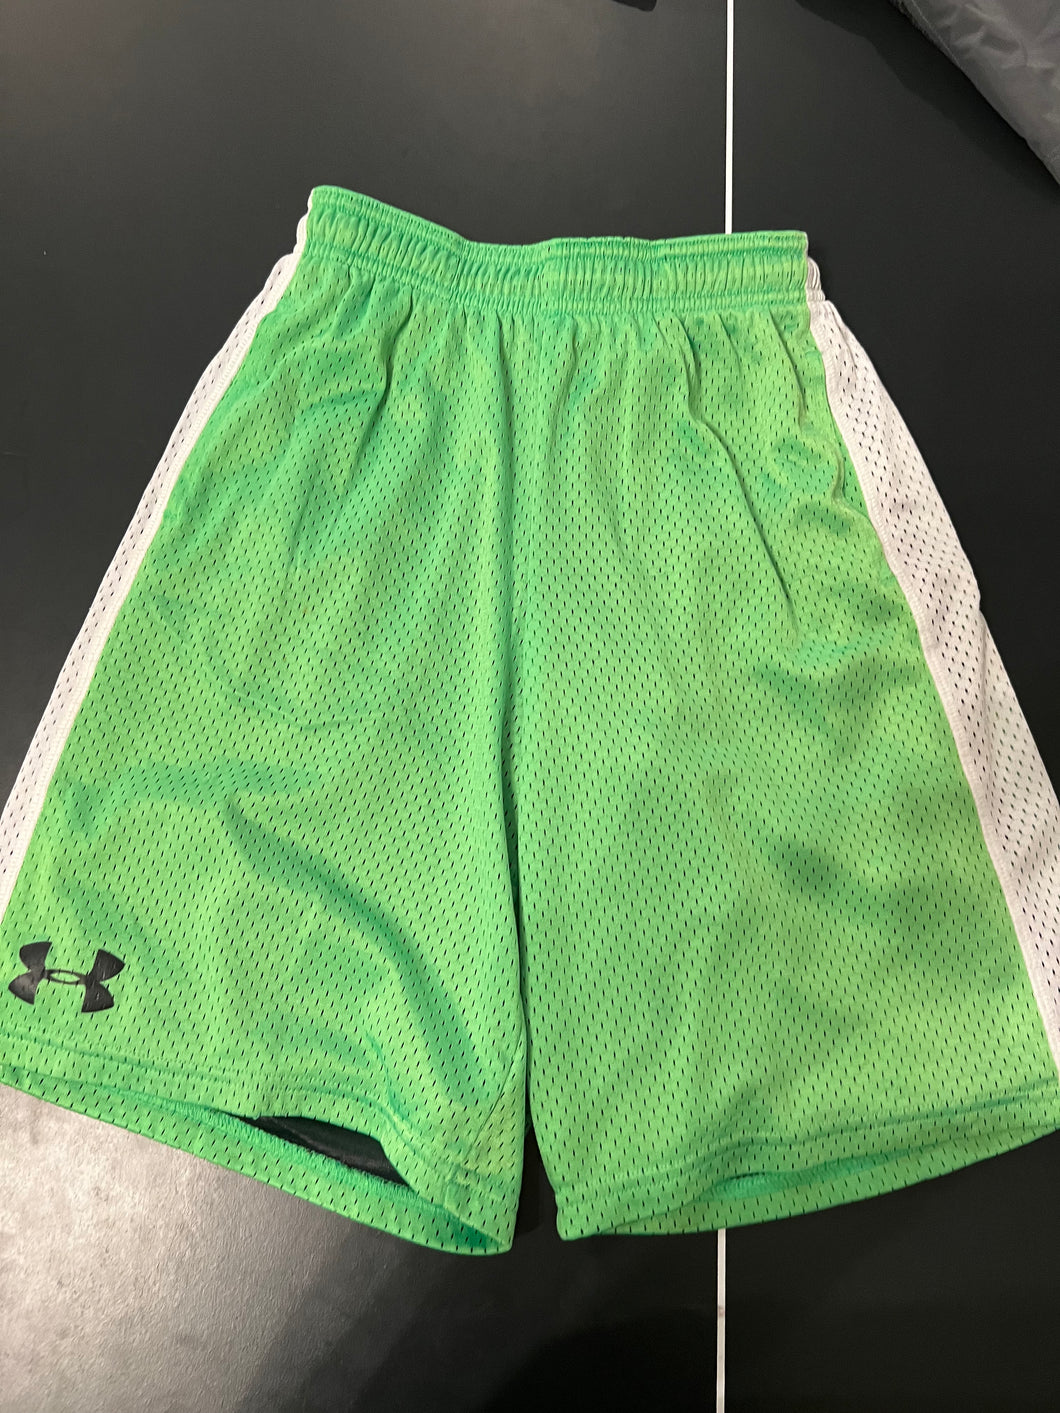 under armour green basketball shorts 13